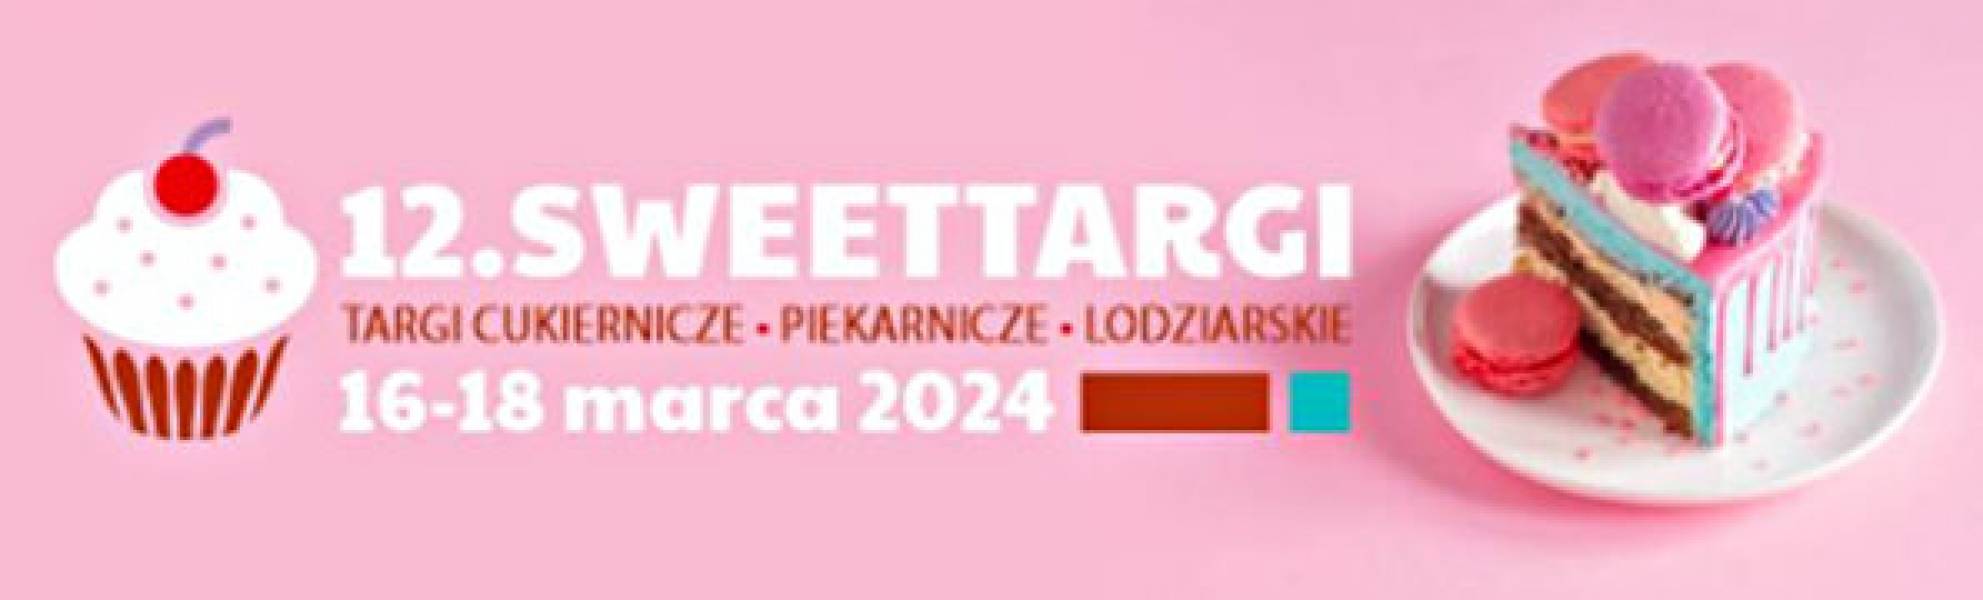 Robiłam lody molekularne na SweetTargach 2024 w Katowicach / SweetTargi 2024